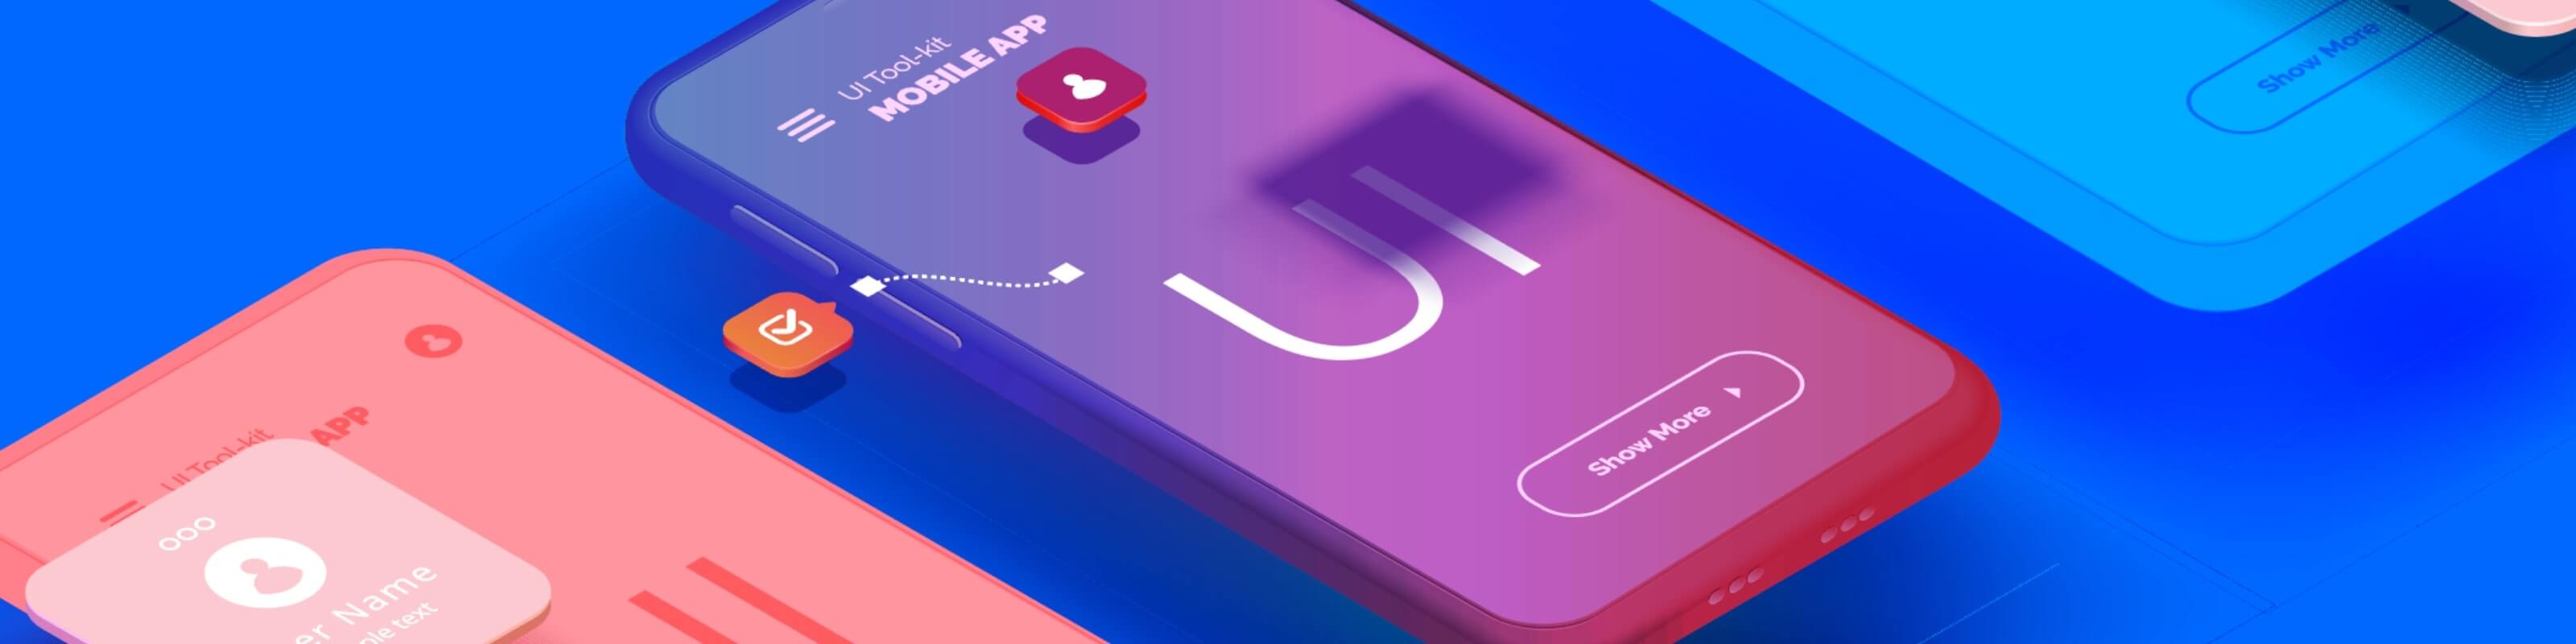 Best practices for mobile app UI design